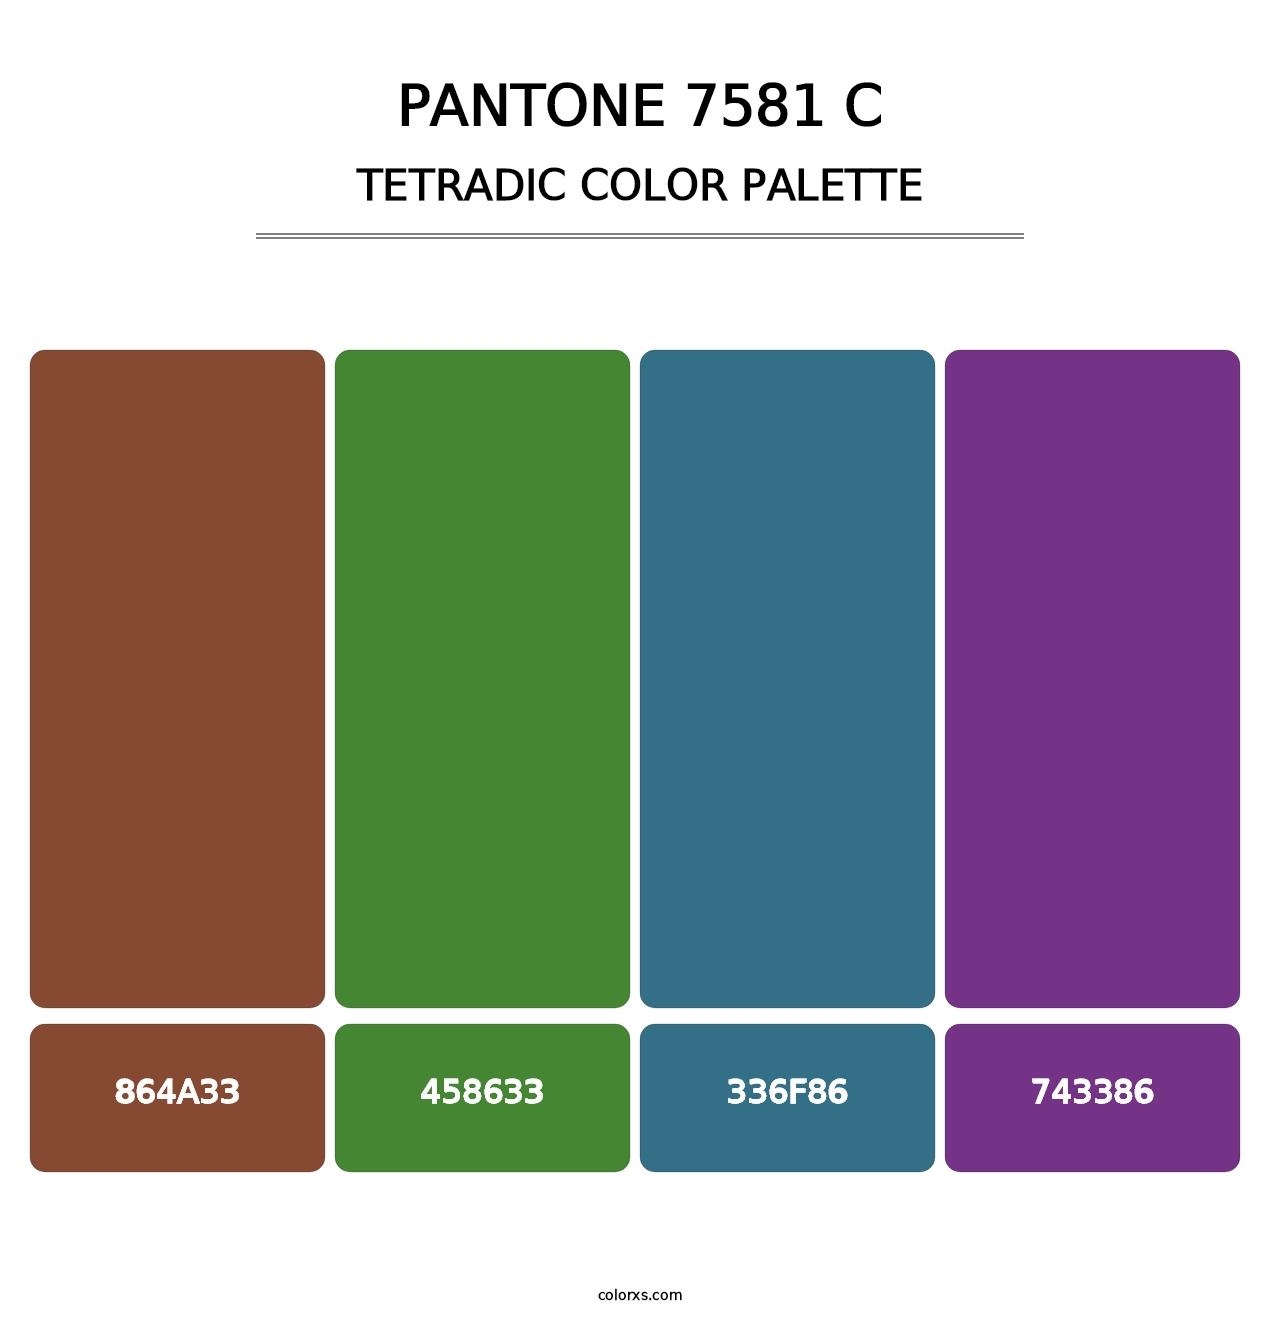 PANTONE 7581 C - Tetradic Color Palette